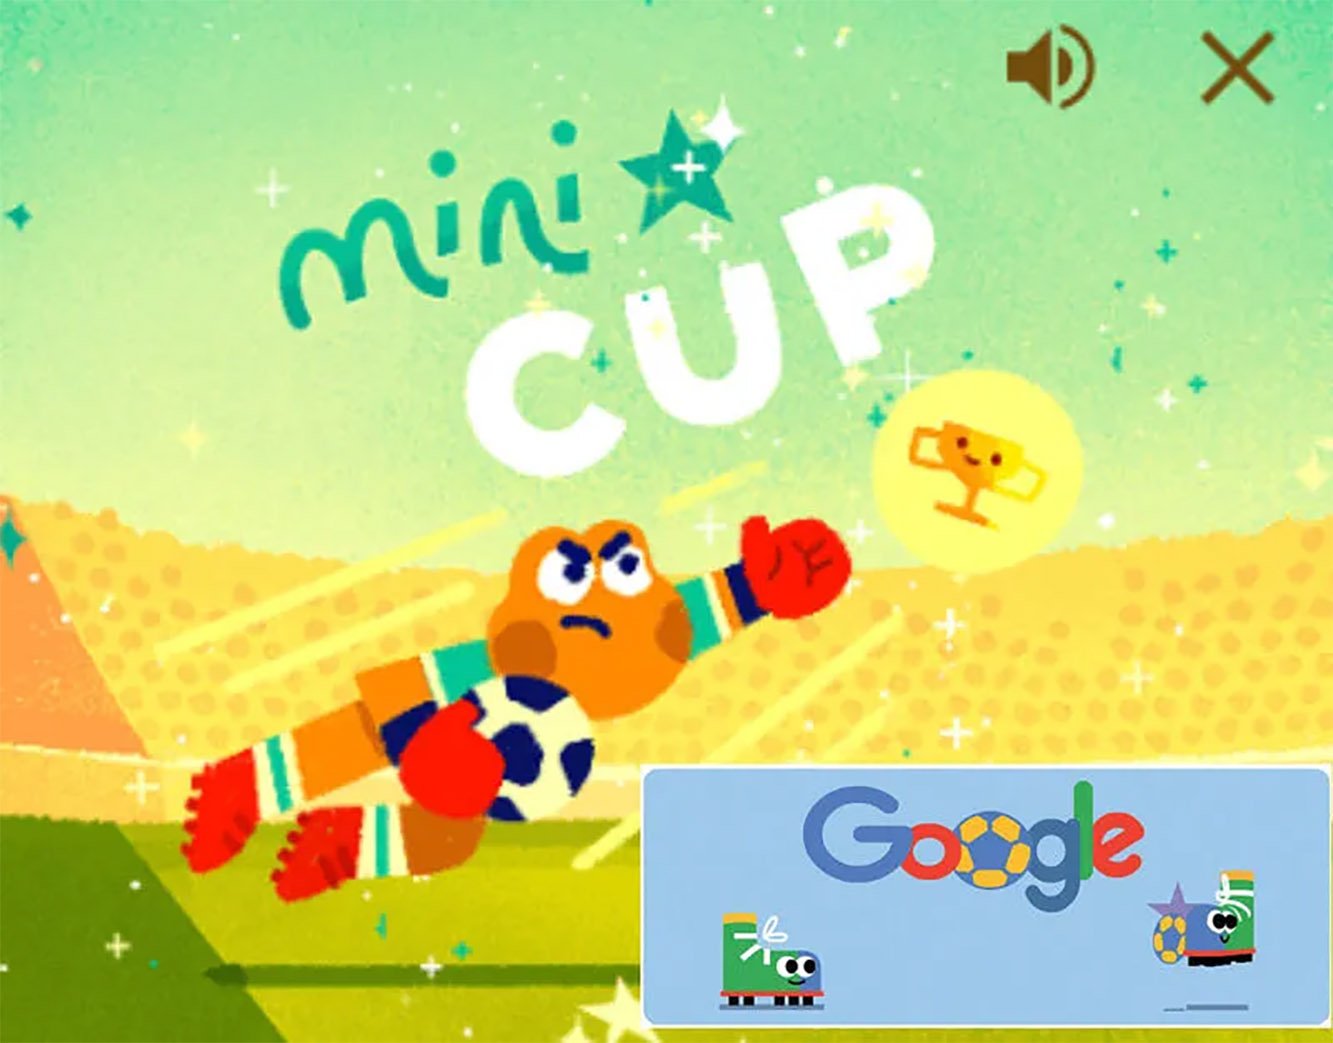 Para jogar basta digitar Google Mini Cup na Pesquisa.